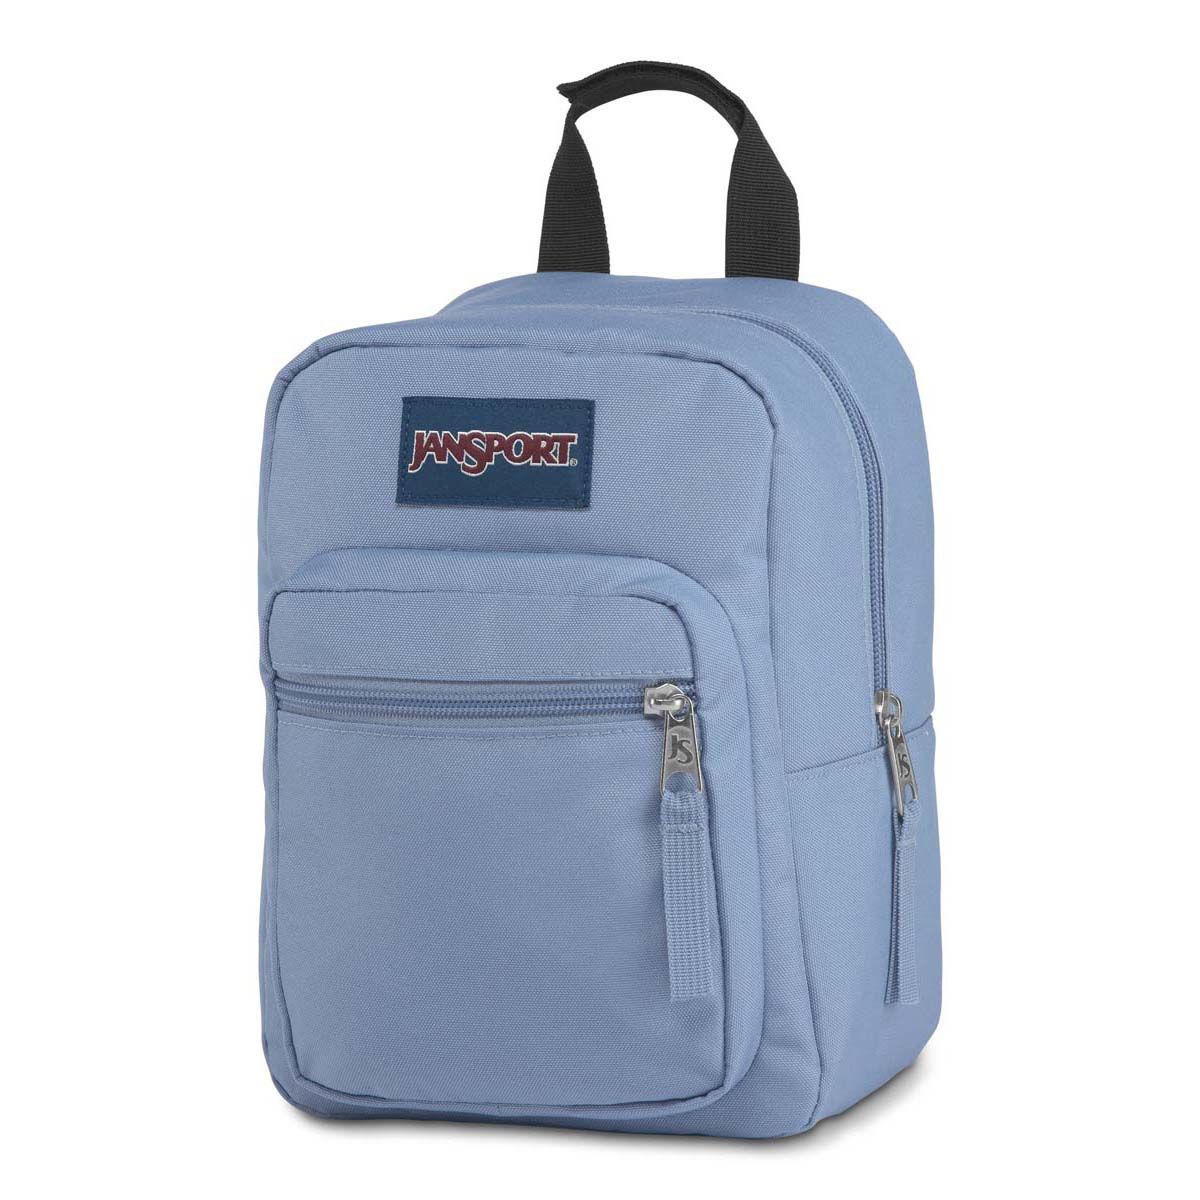 Jansport Big Break Lunch Bag In Blue Agave Neon